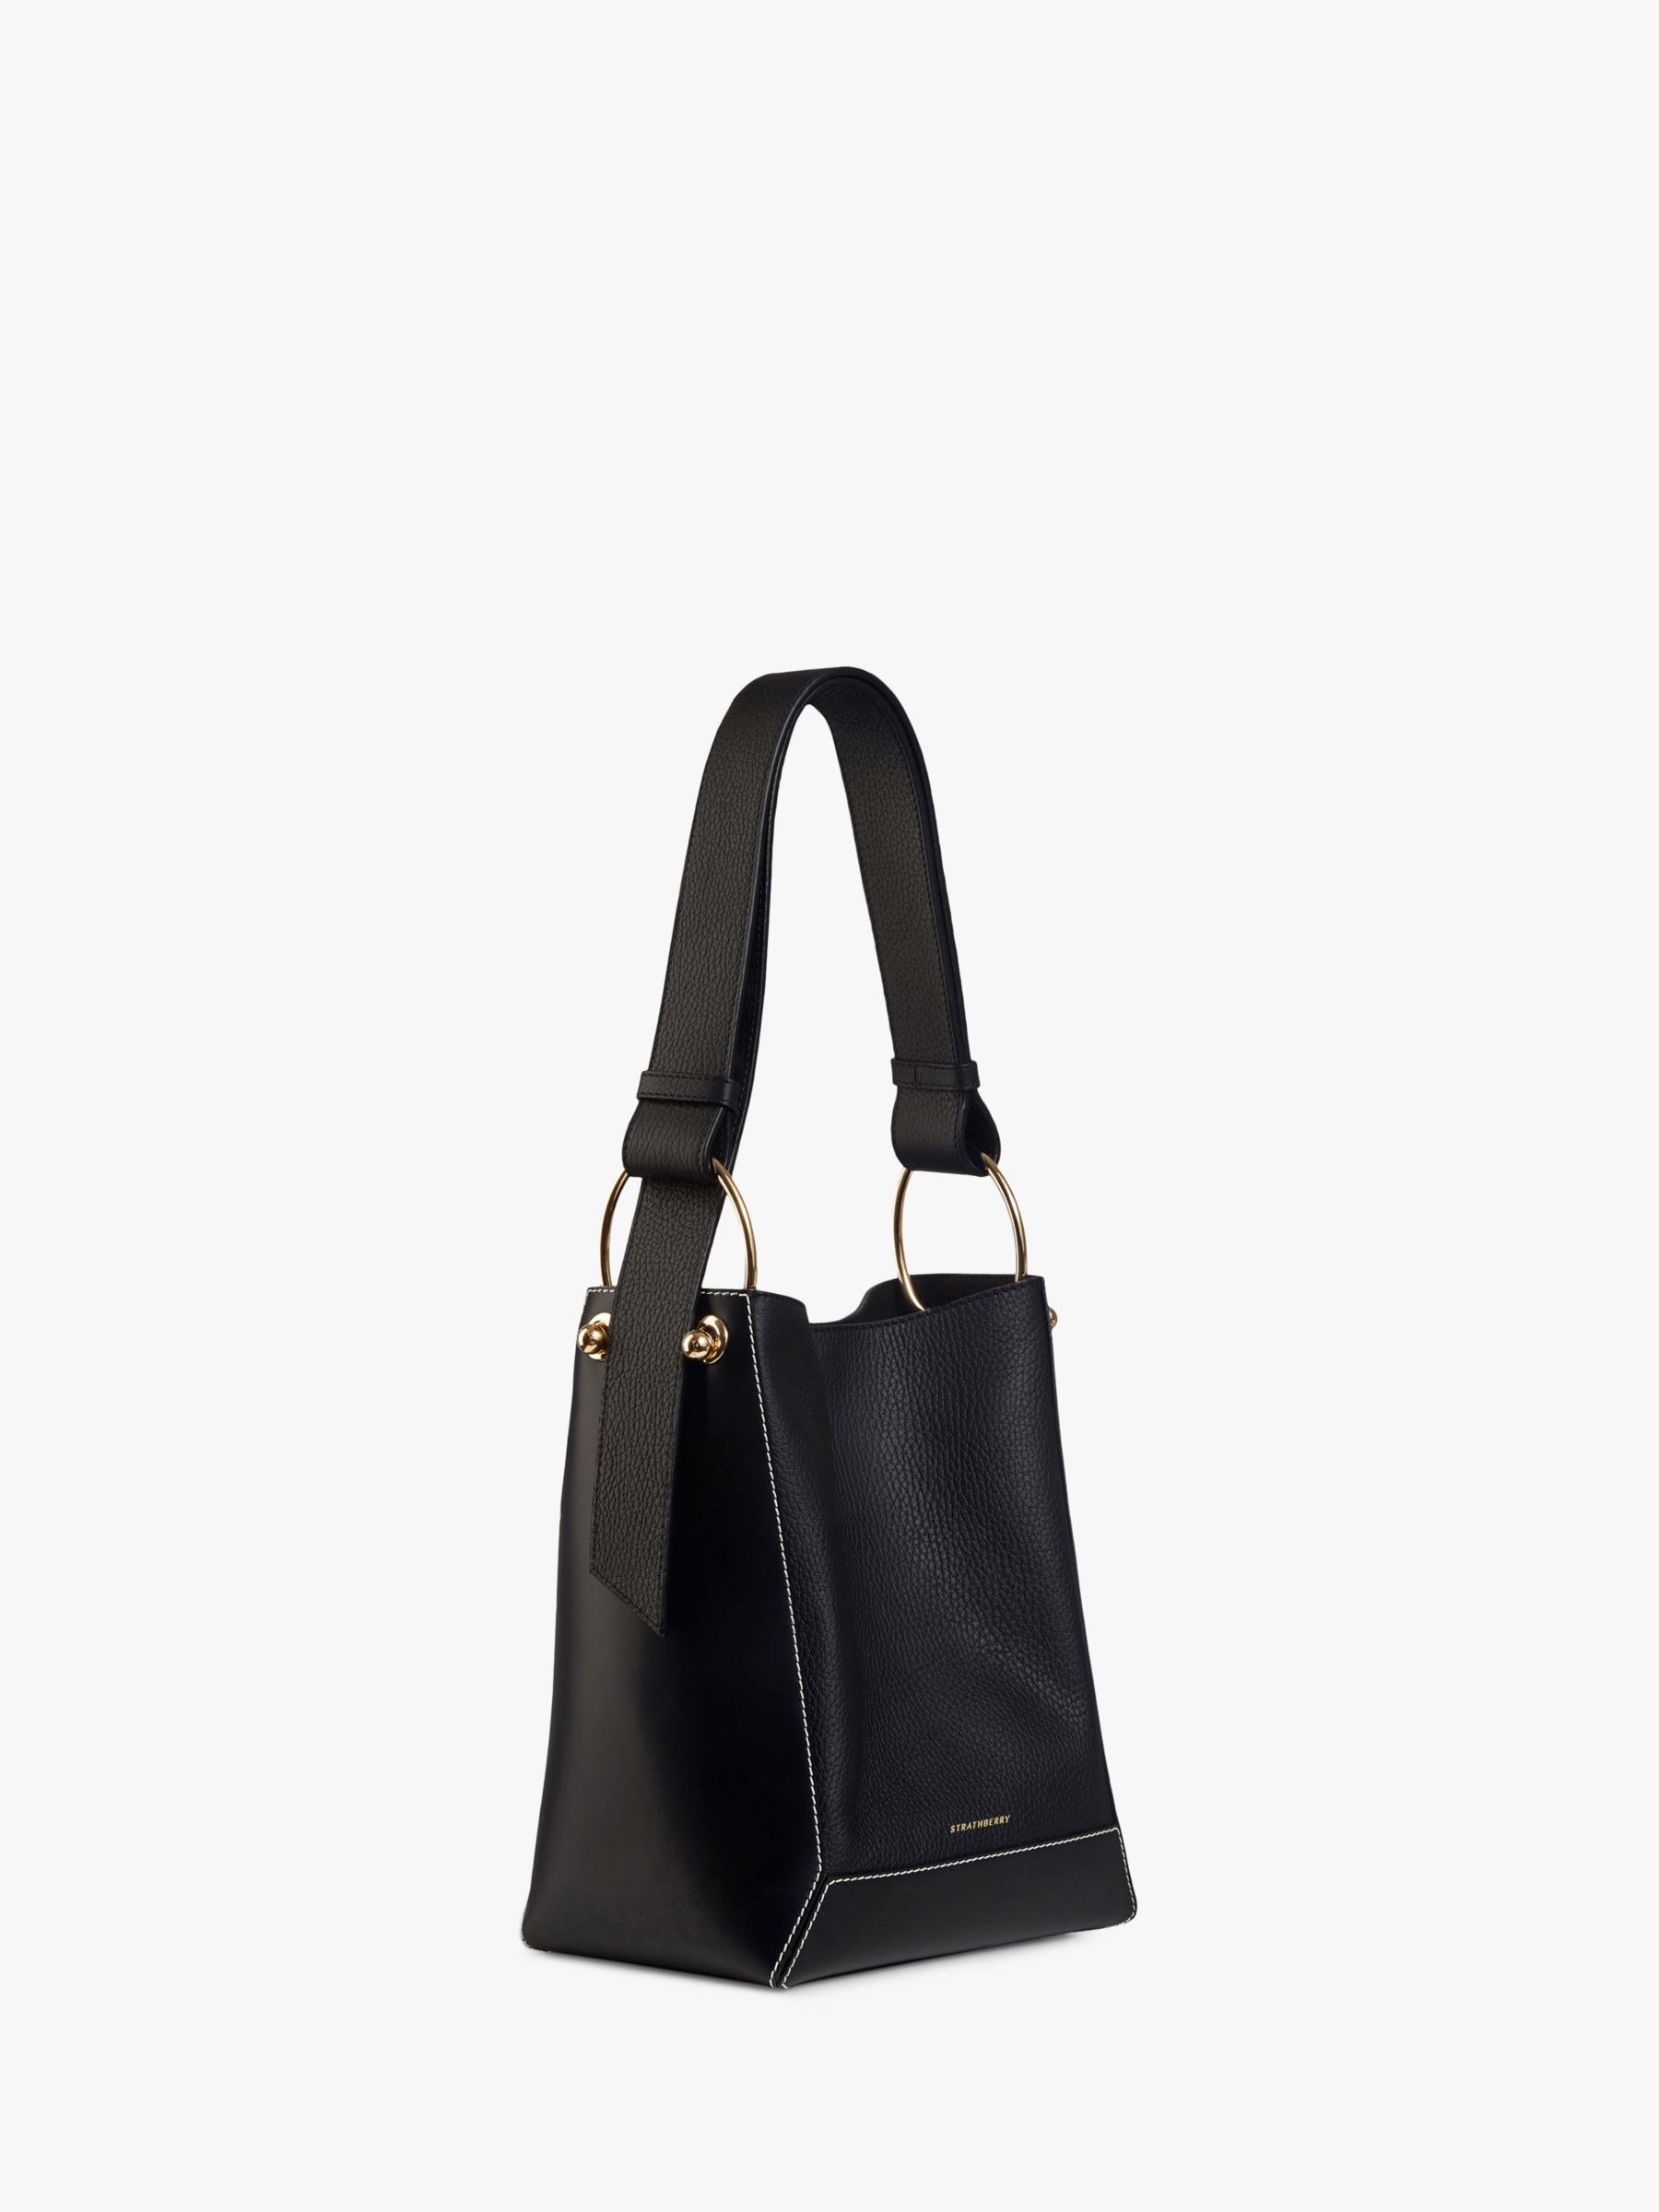 Strathberry Lana Osette Leather Bucket Bag, Black at John Lewis & Partners